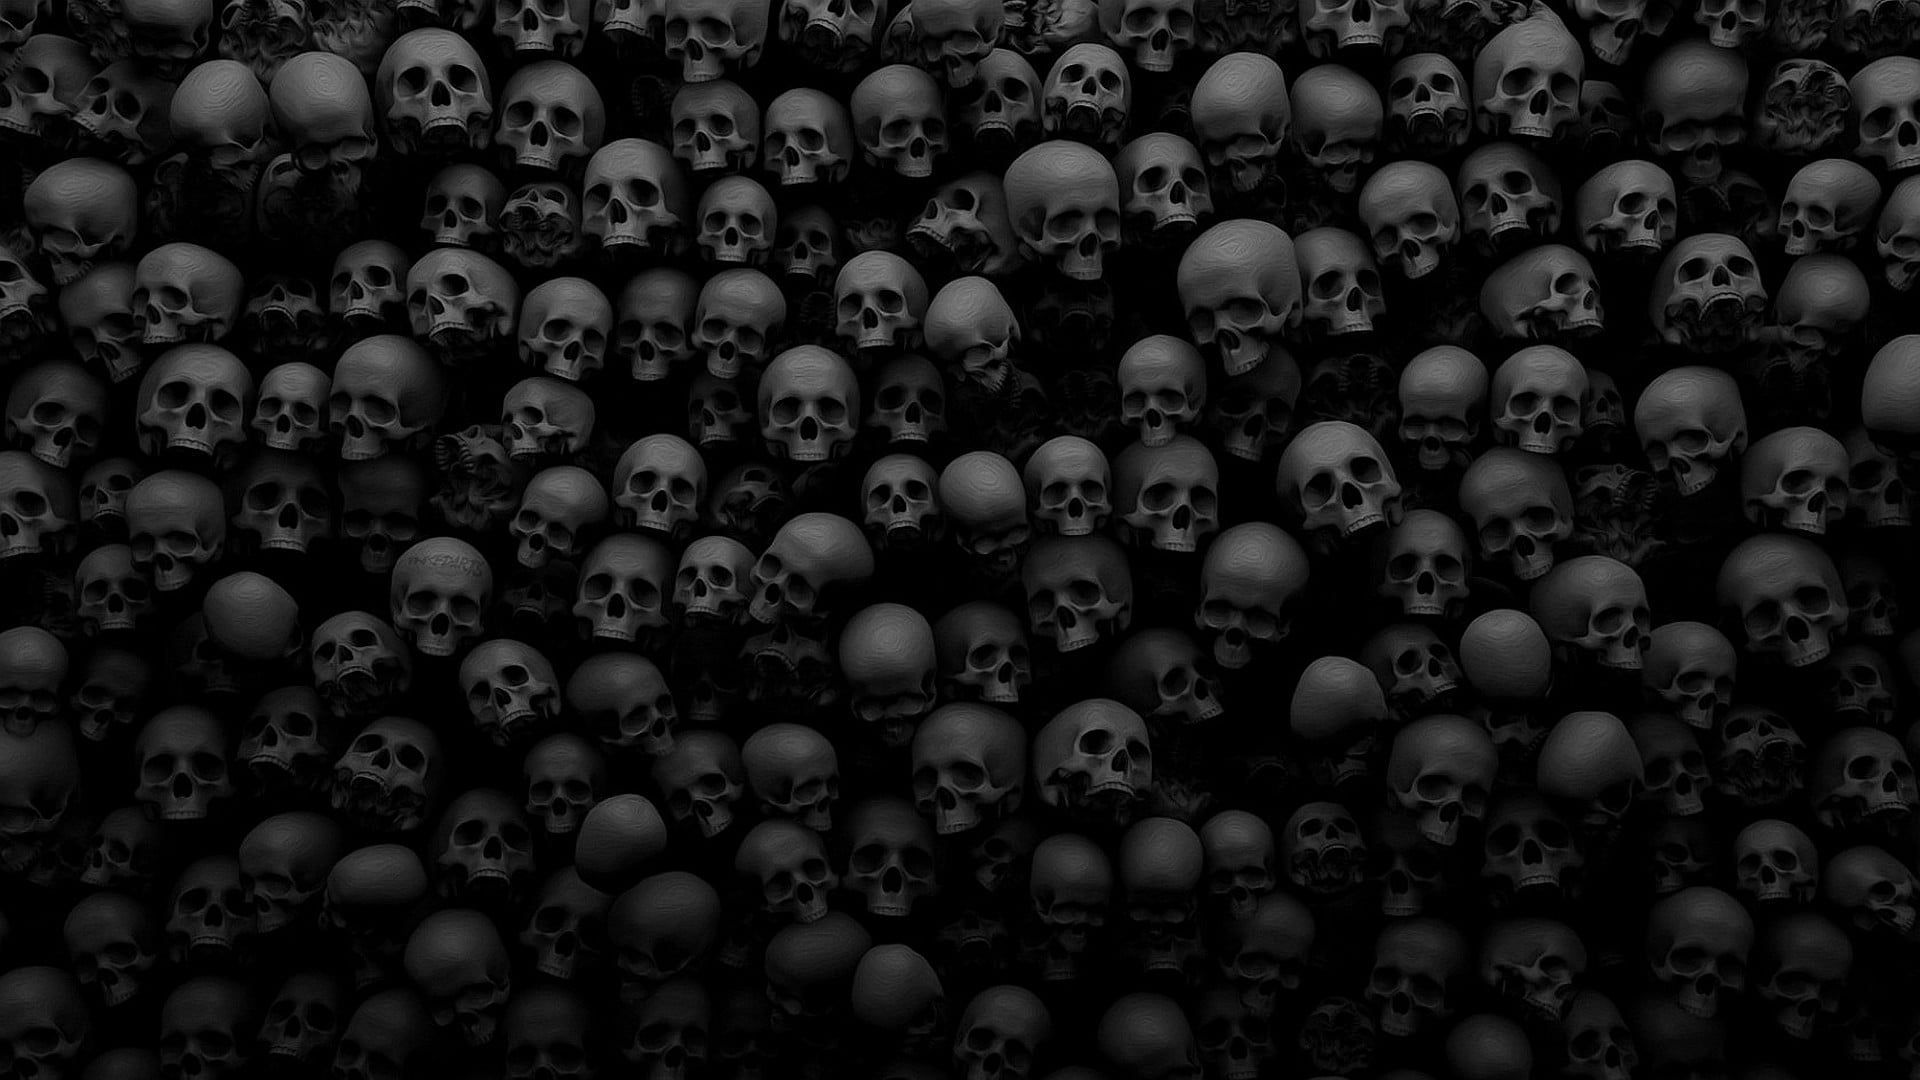 1920x1080 skulls wallpaper #skull #monochrome #1080P #wallpaper #hdwallpaper #desktop | Wallpaper calaveras, Fondos de pantalla calaveras, Im&Atilde;&iexcl;genes del cr&Atilde;&iexcl;ne